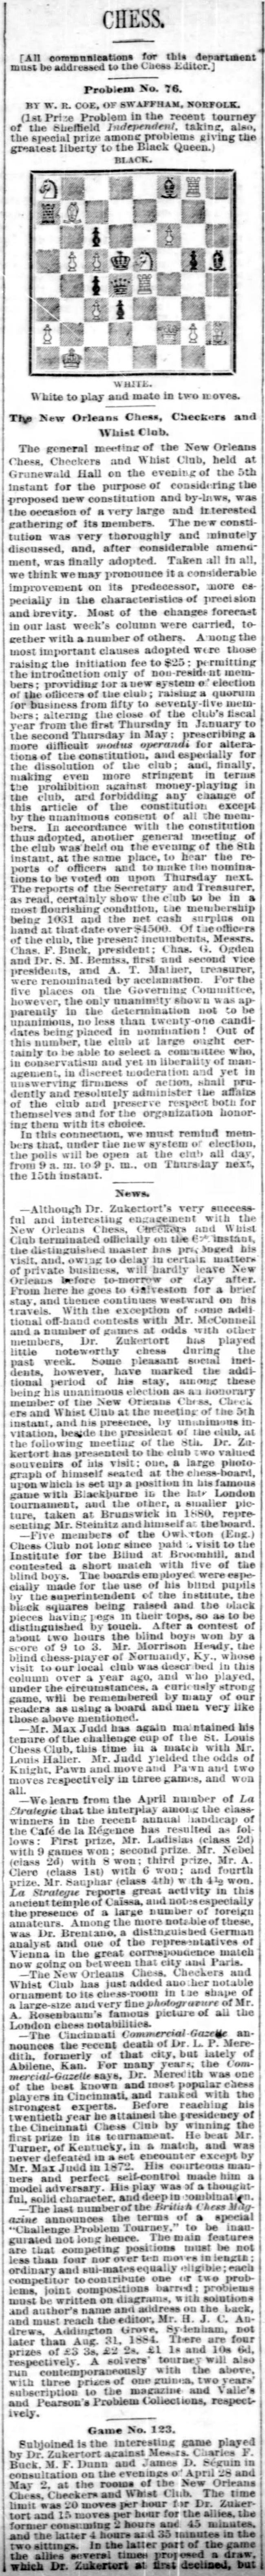 1884.05.11-01 New Orleans Times-Democrat.jpg